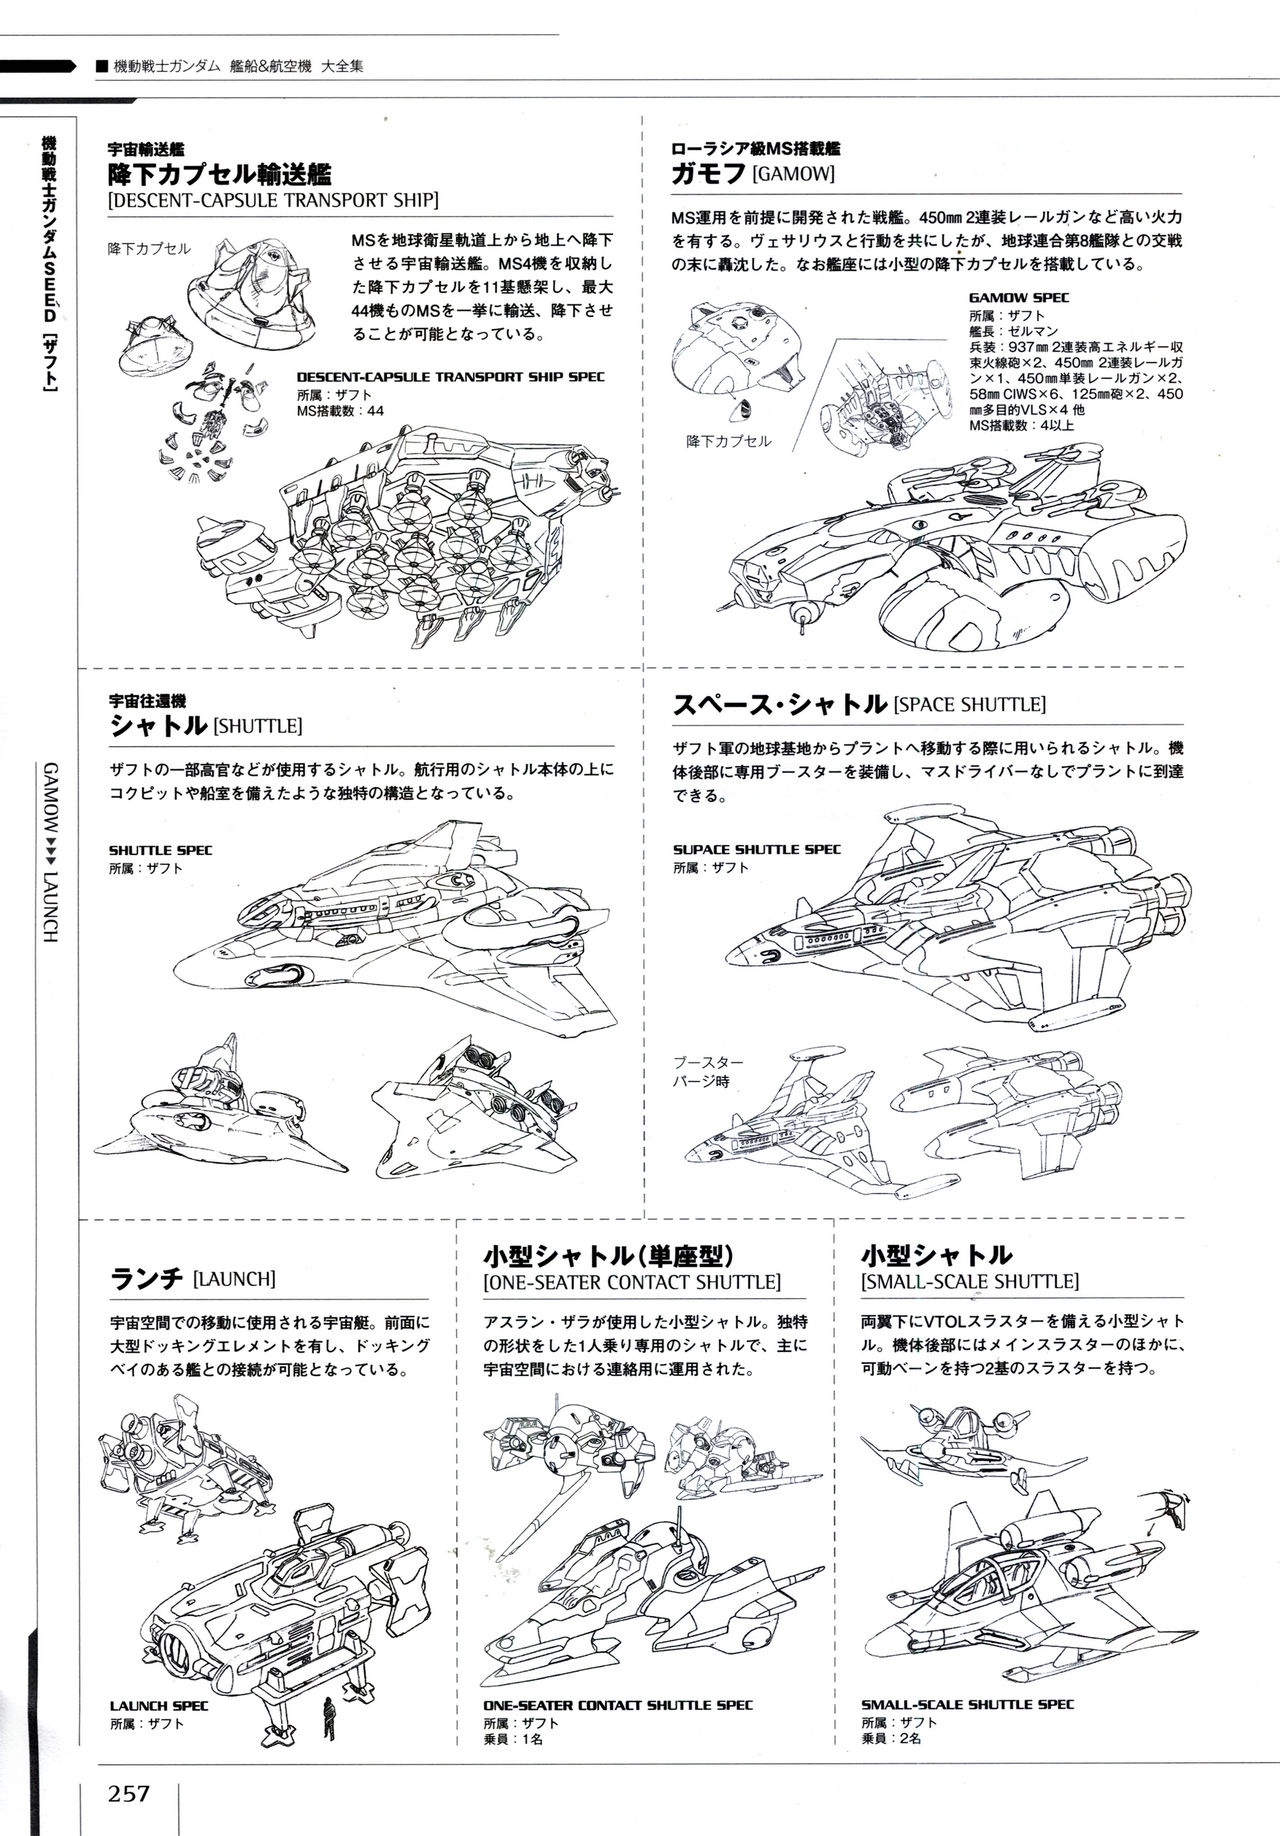 Mobile Suit Gundam - Ship & Aerospace Plane Encyclopedia - Revised Edition 262